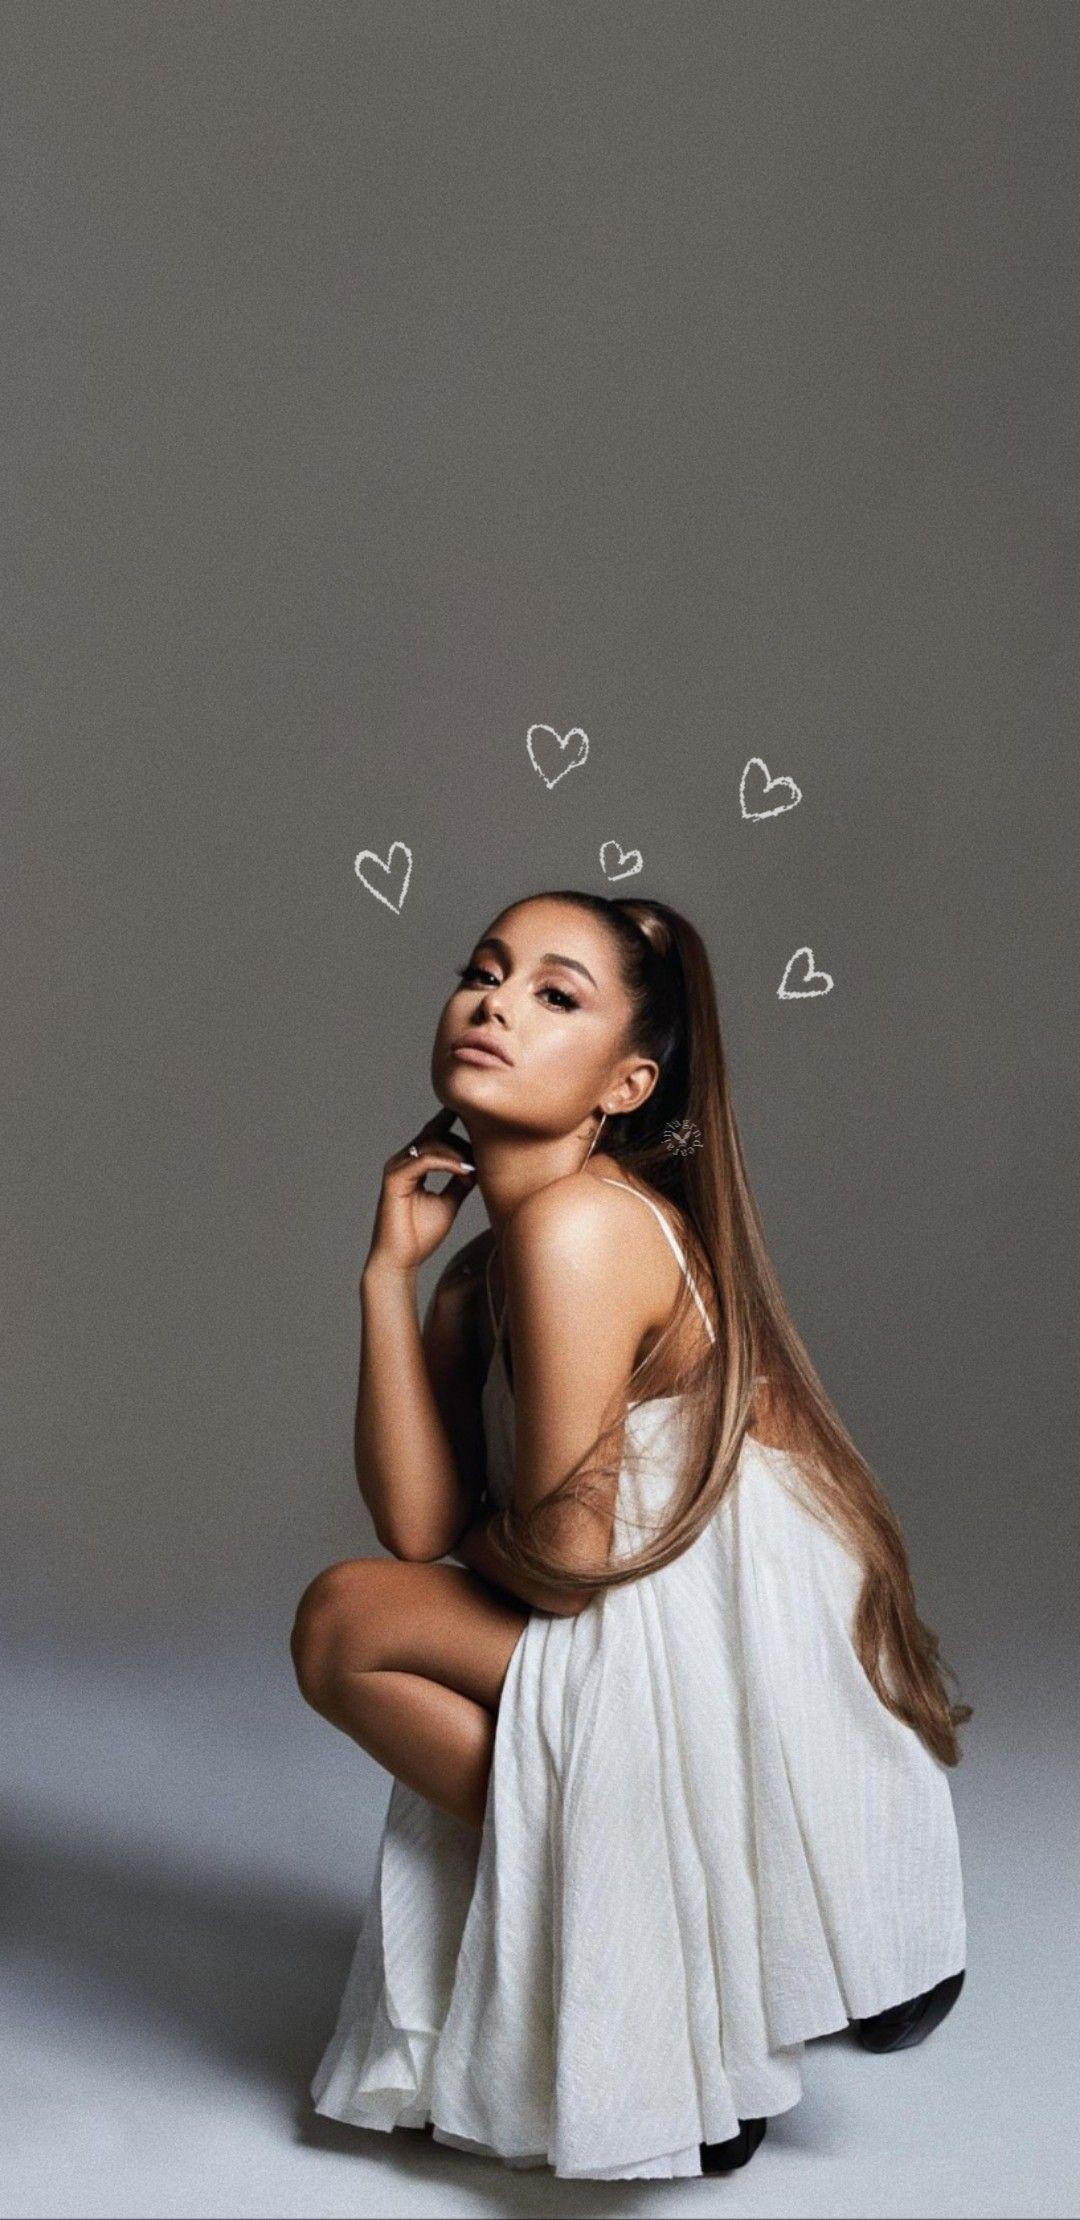 Aesthetic Ariana Grande Wallpaper